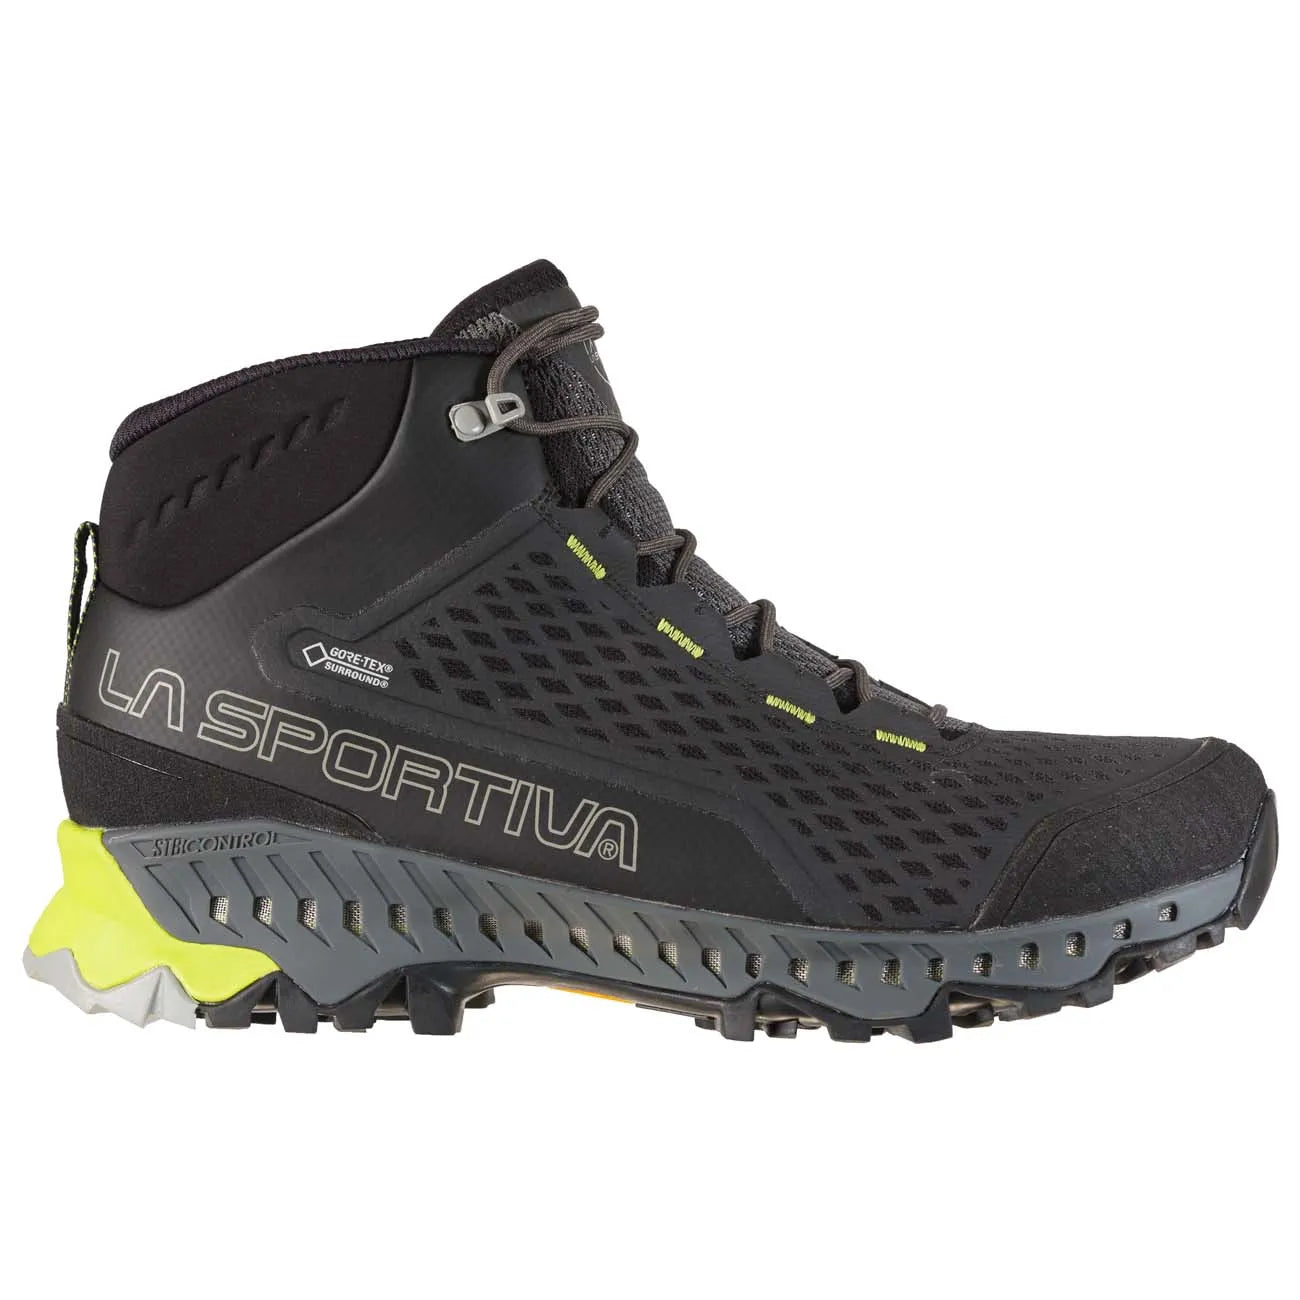 La Sportiva Stream GTX Mid Hiking Boot Mens - Find Your Feet Australia Hobart Launceston Tasmania